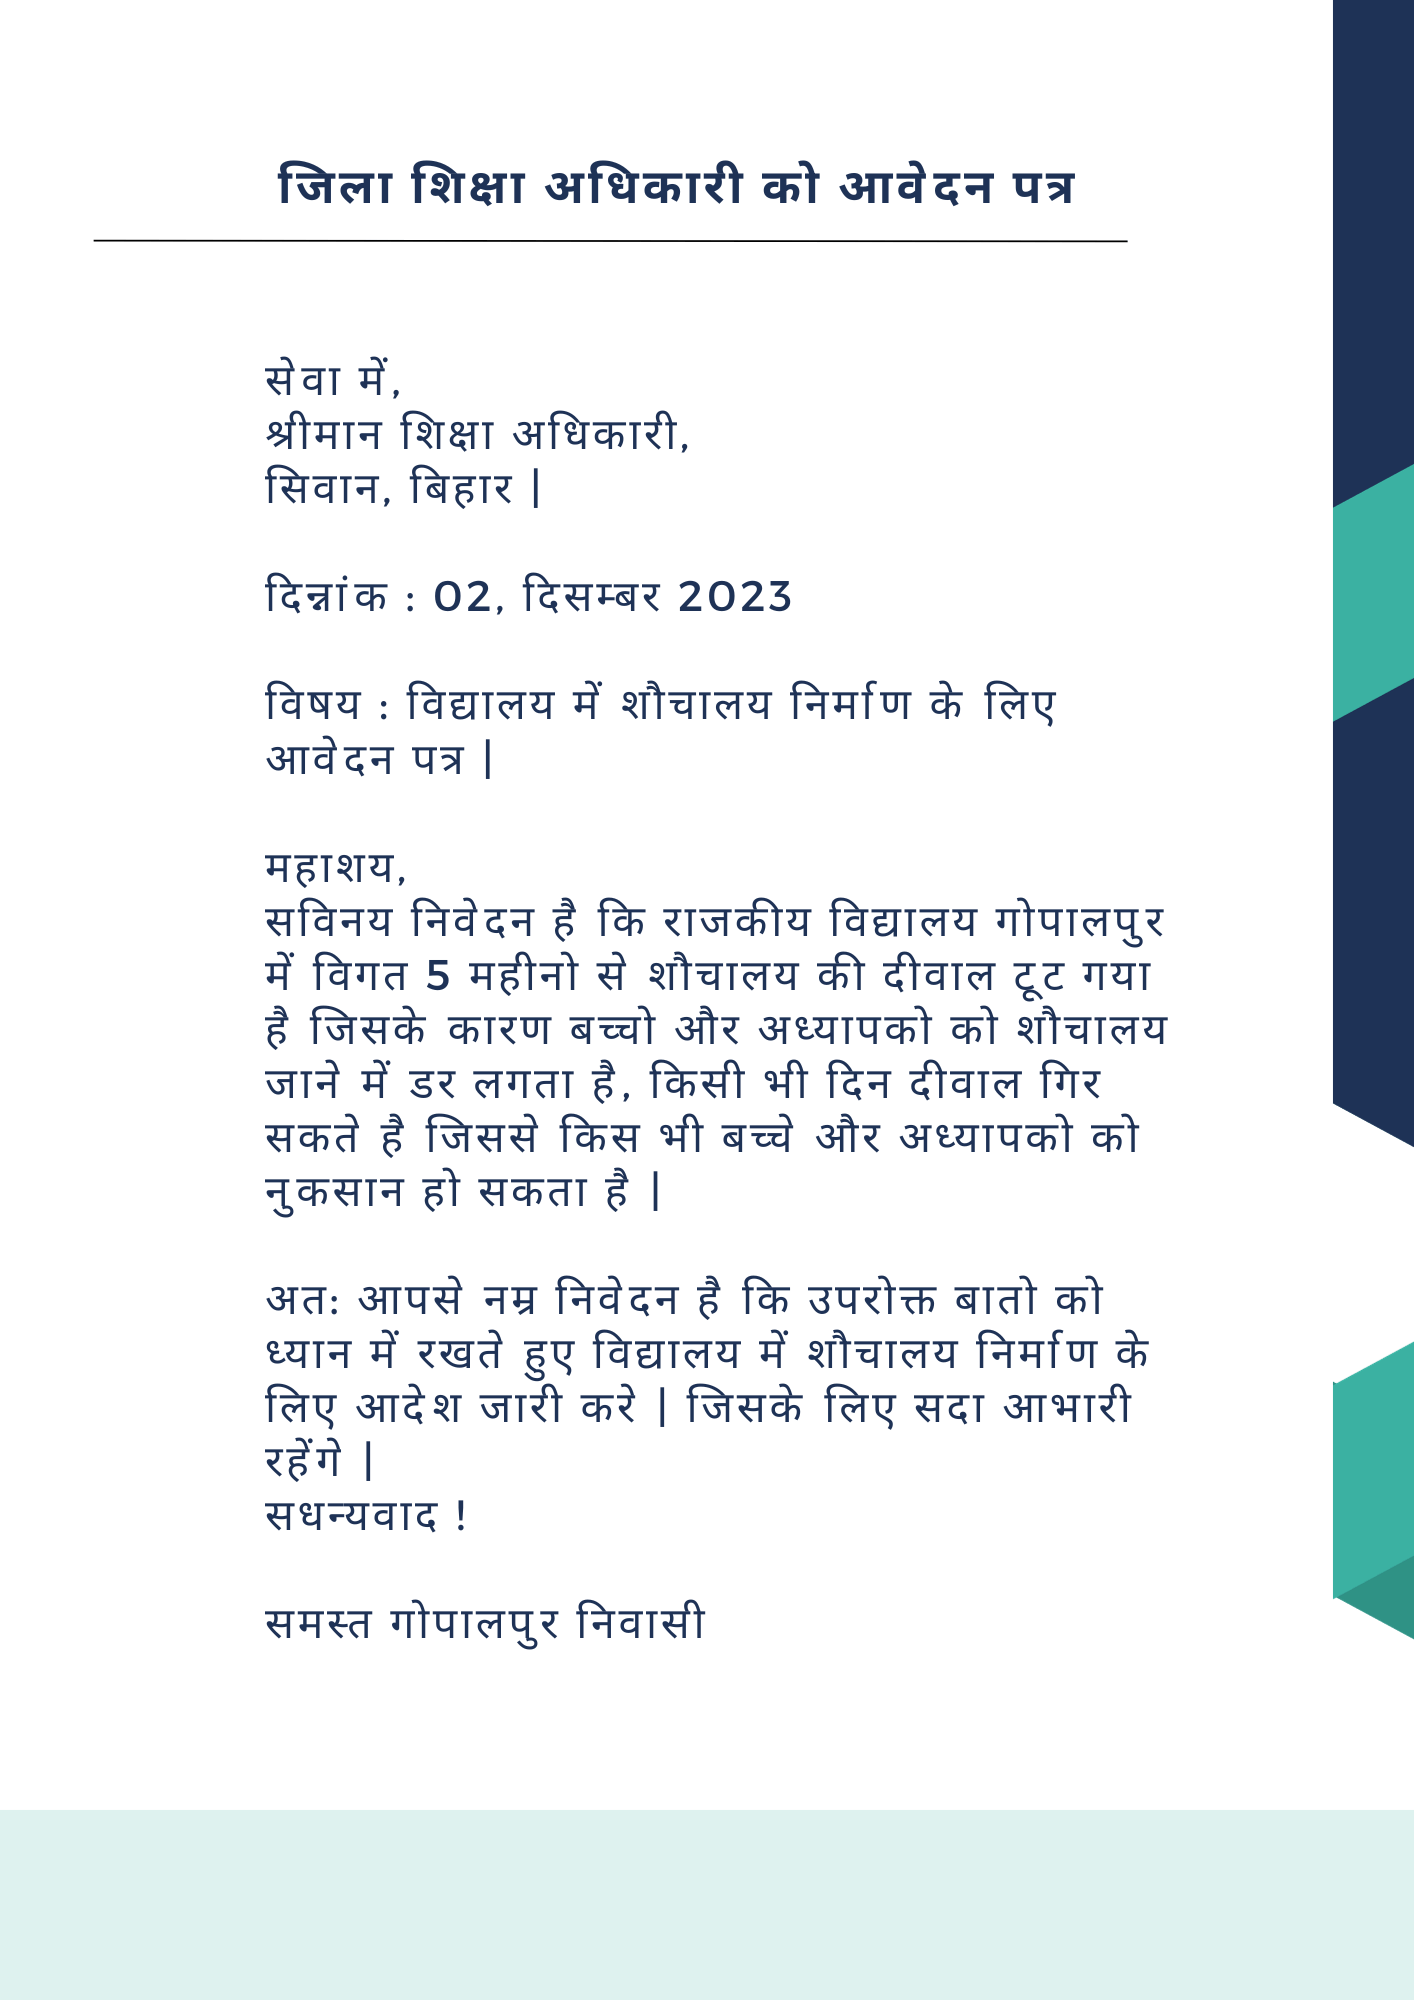 जिला शिक्षा अधिकारी को आवेदन पत्र letter to District Education officer in Hindi